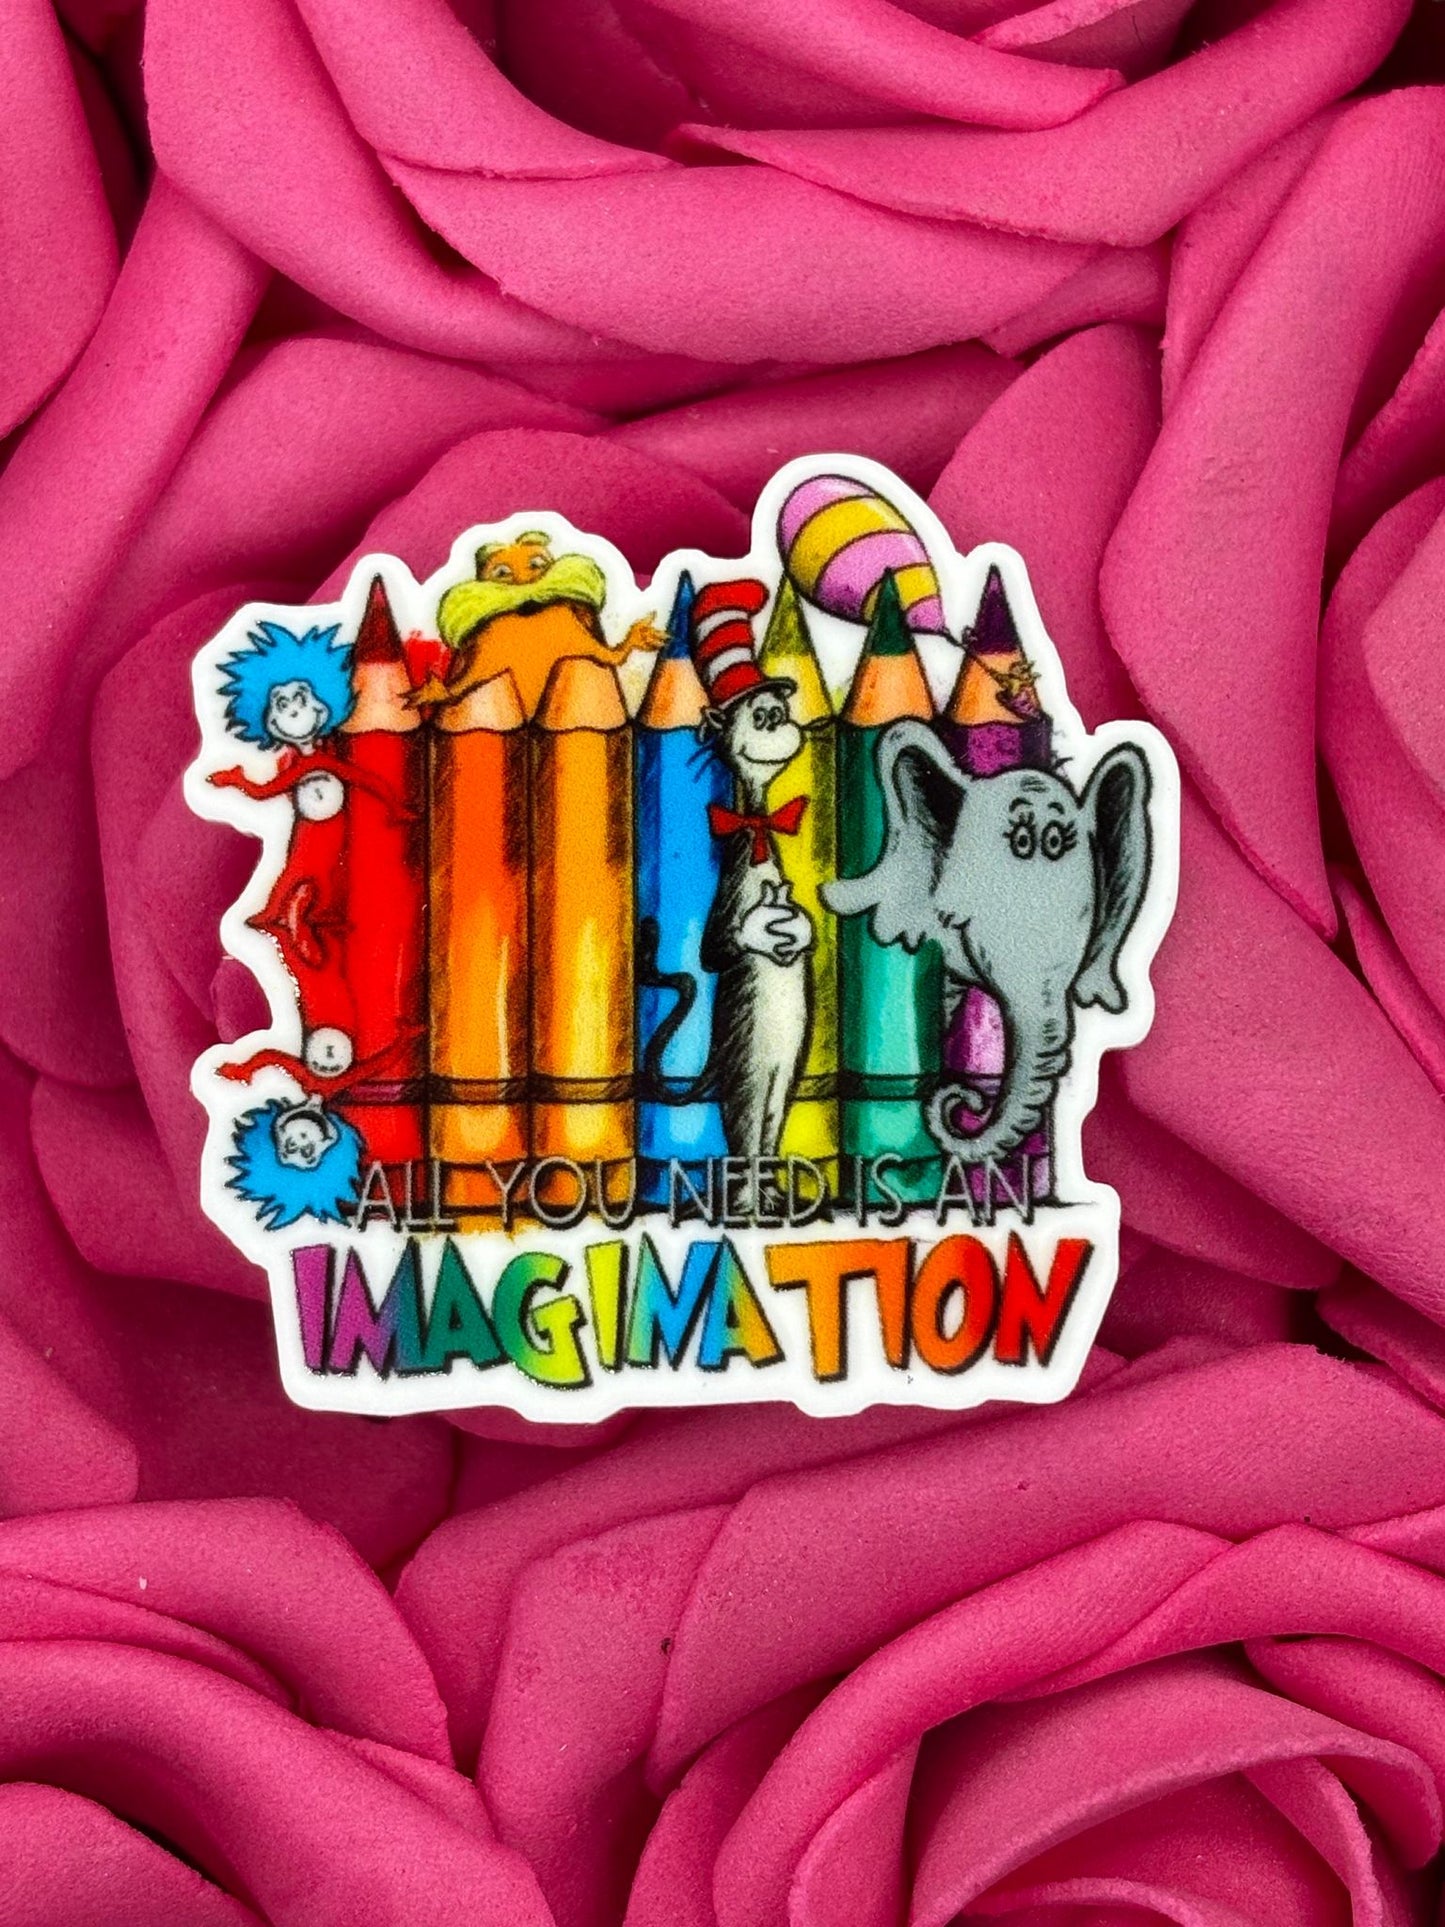 #3124 Imagination